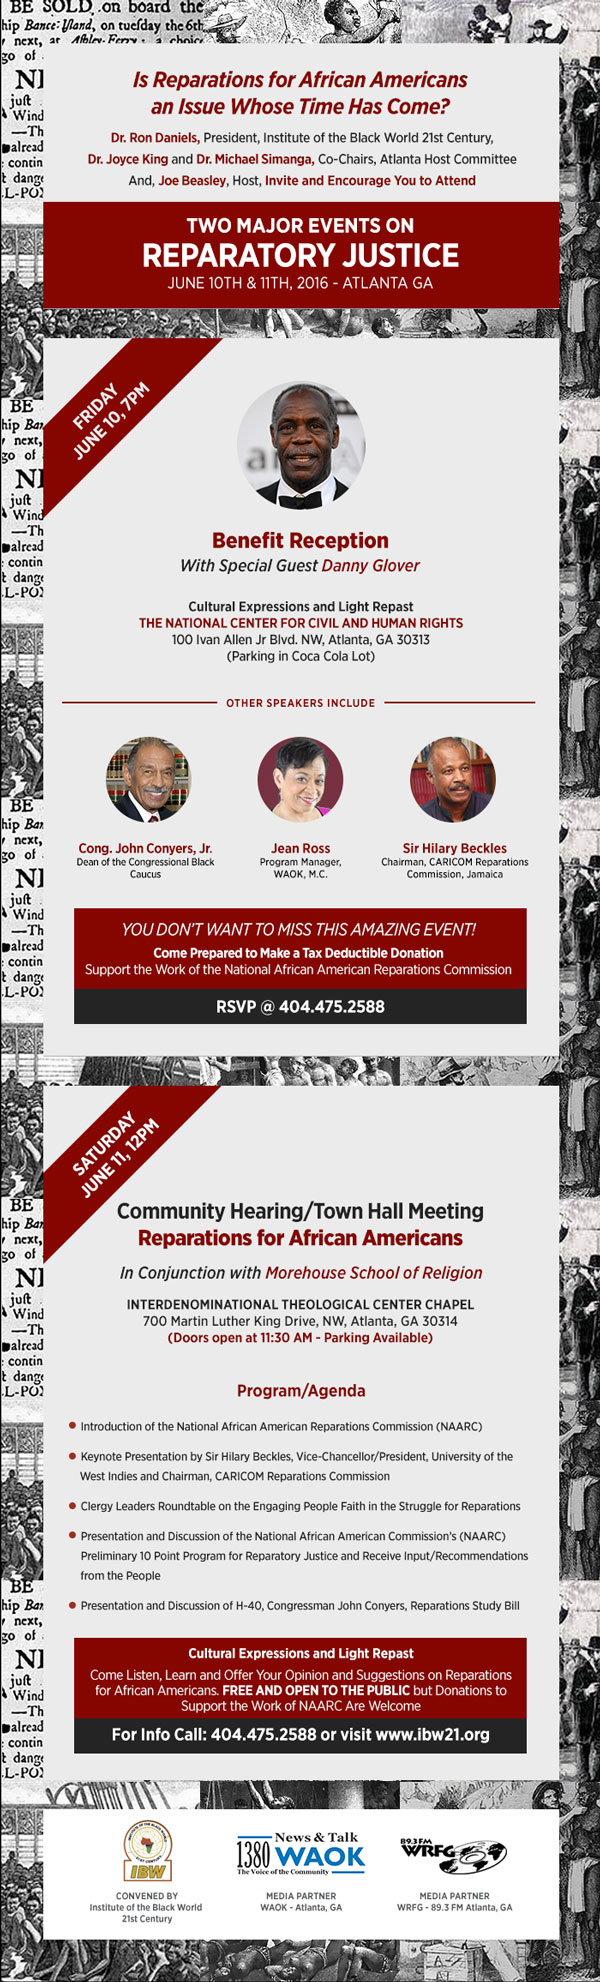 Two Major Events on Reparatory Justice – June 10th & 11th, 2016, Atlanta, GA